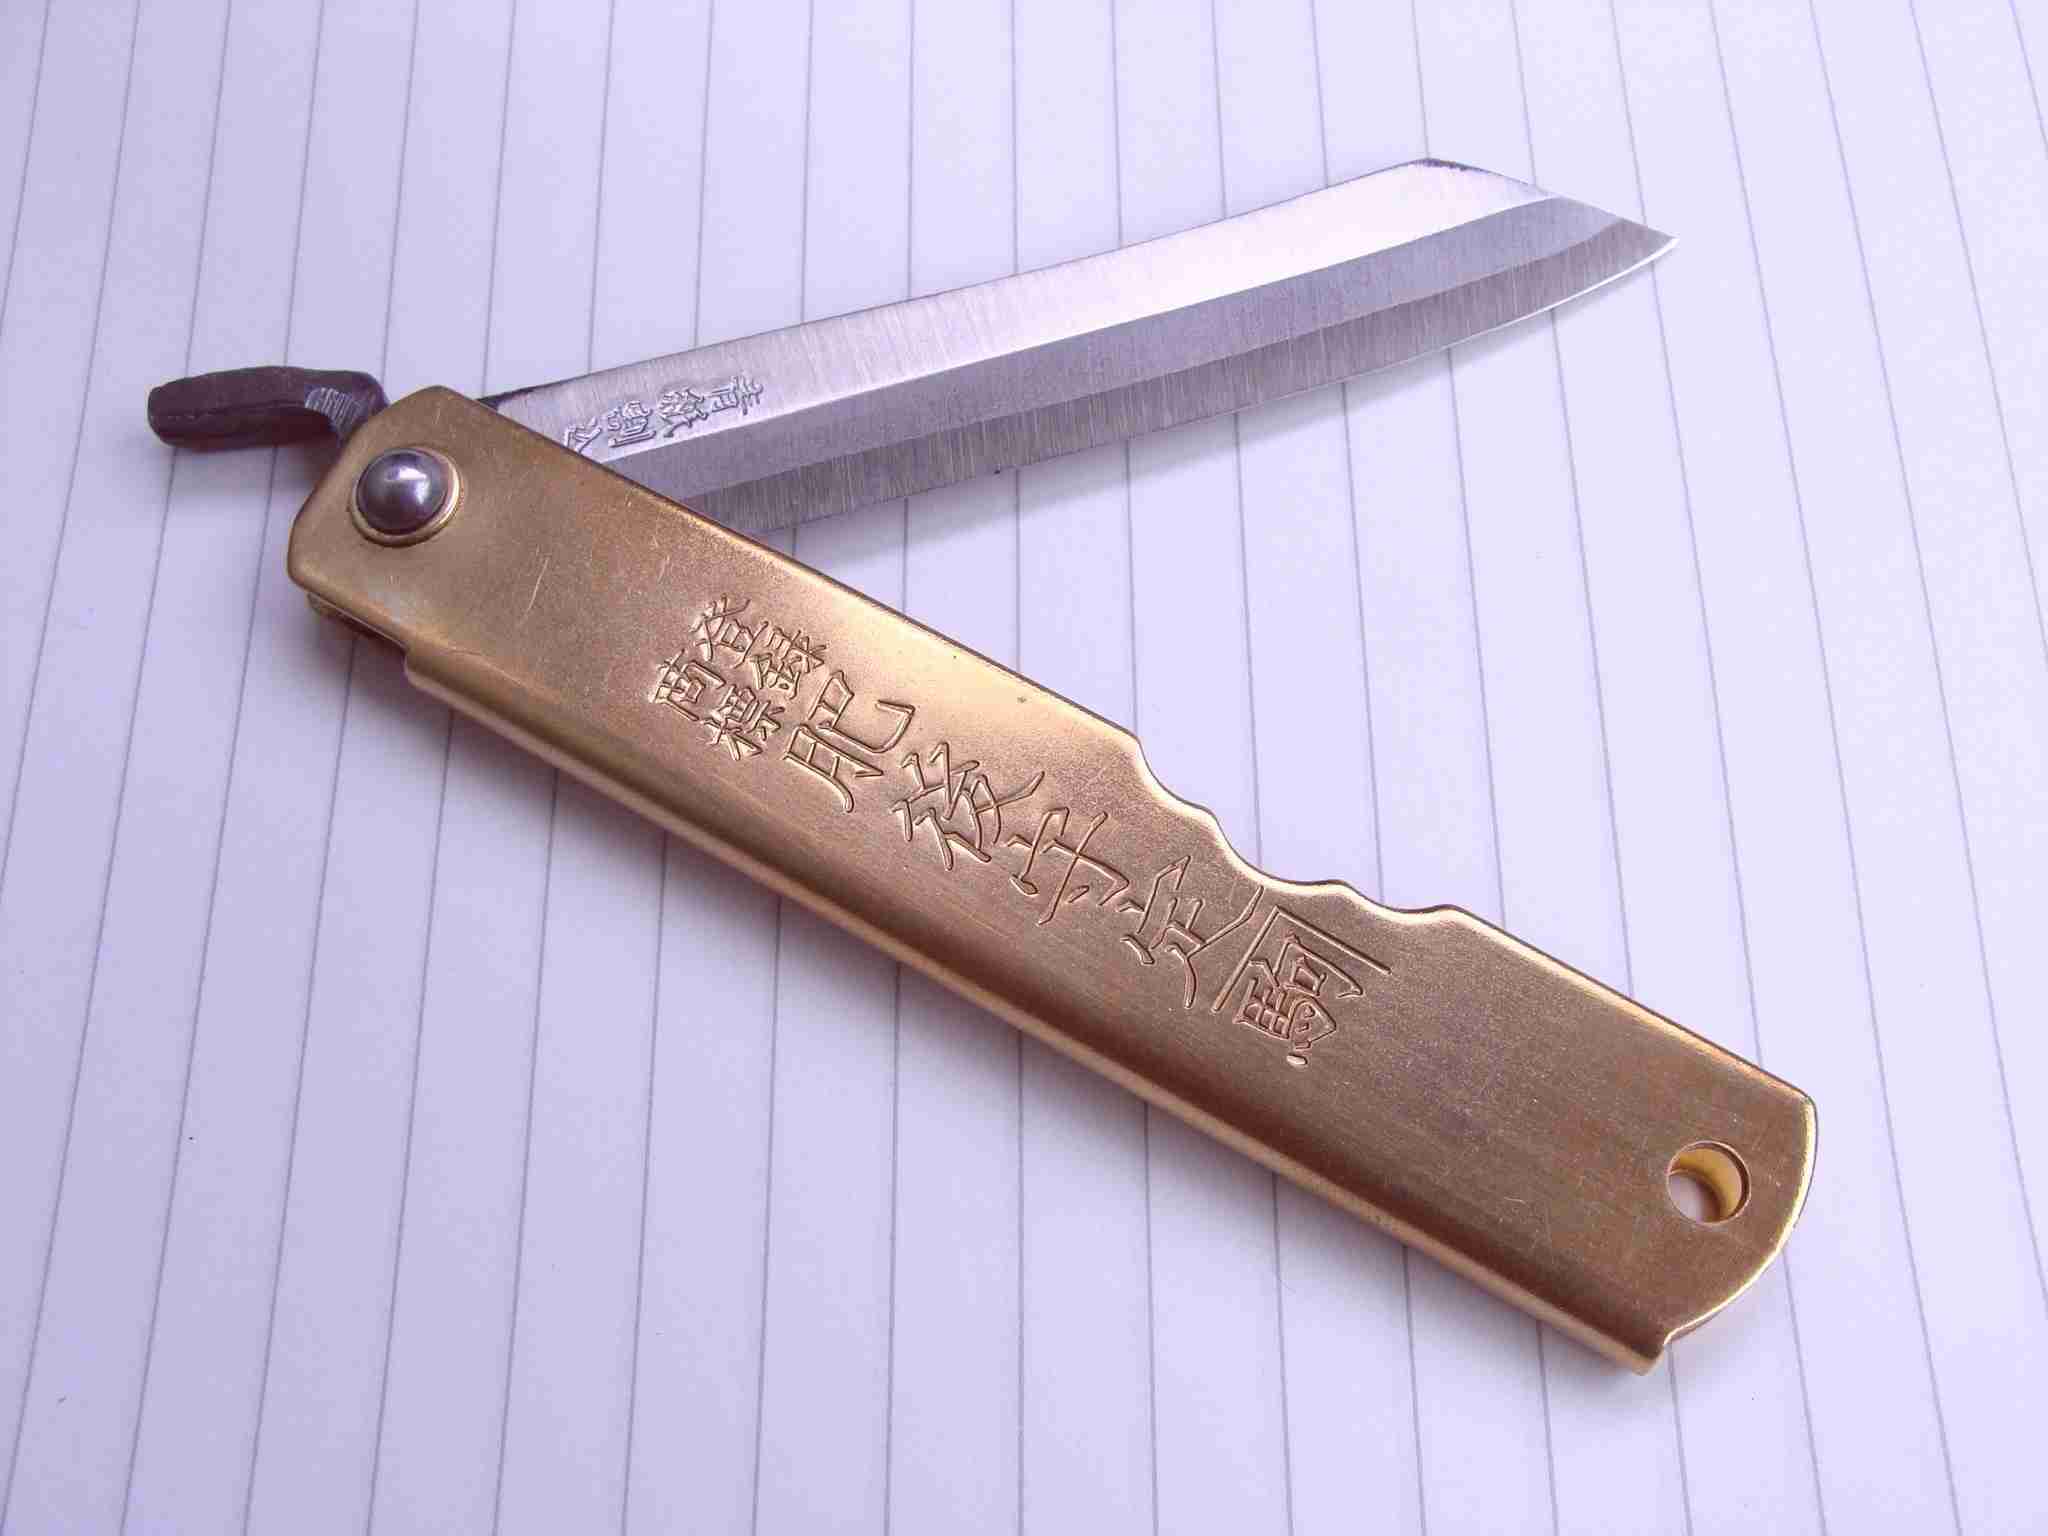 Features of the Higonokami knife